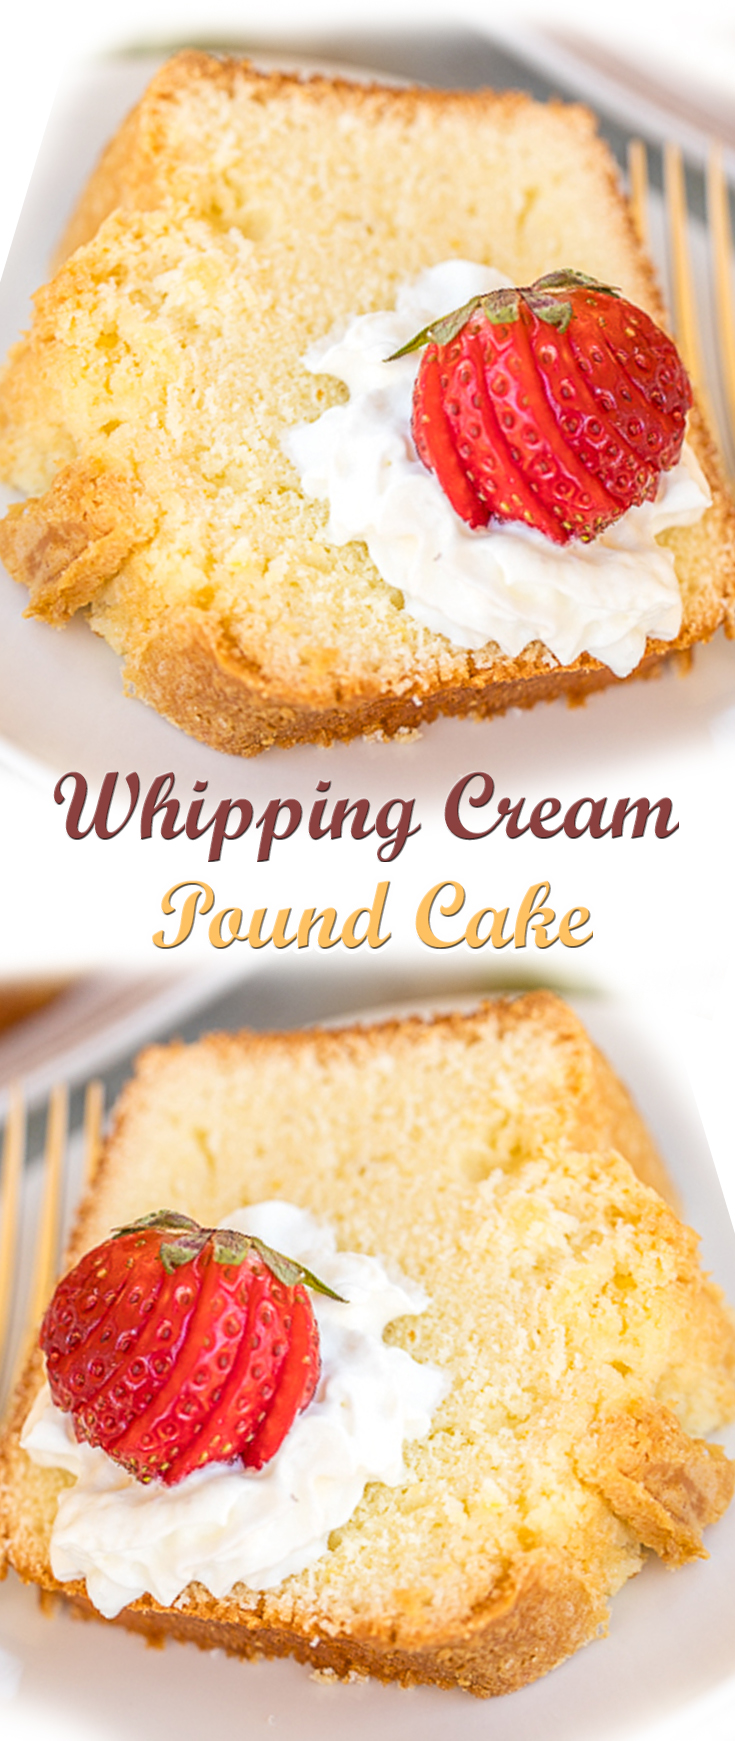 Whipping Cream Pound Cake Recipe